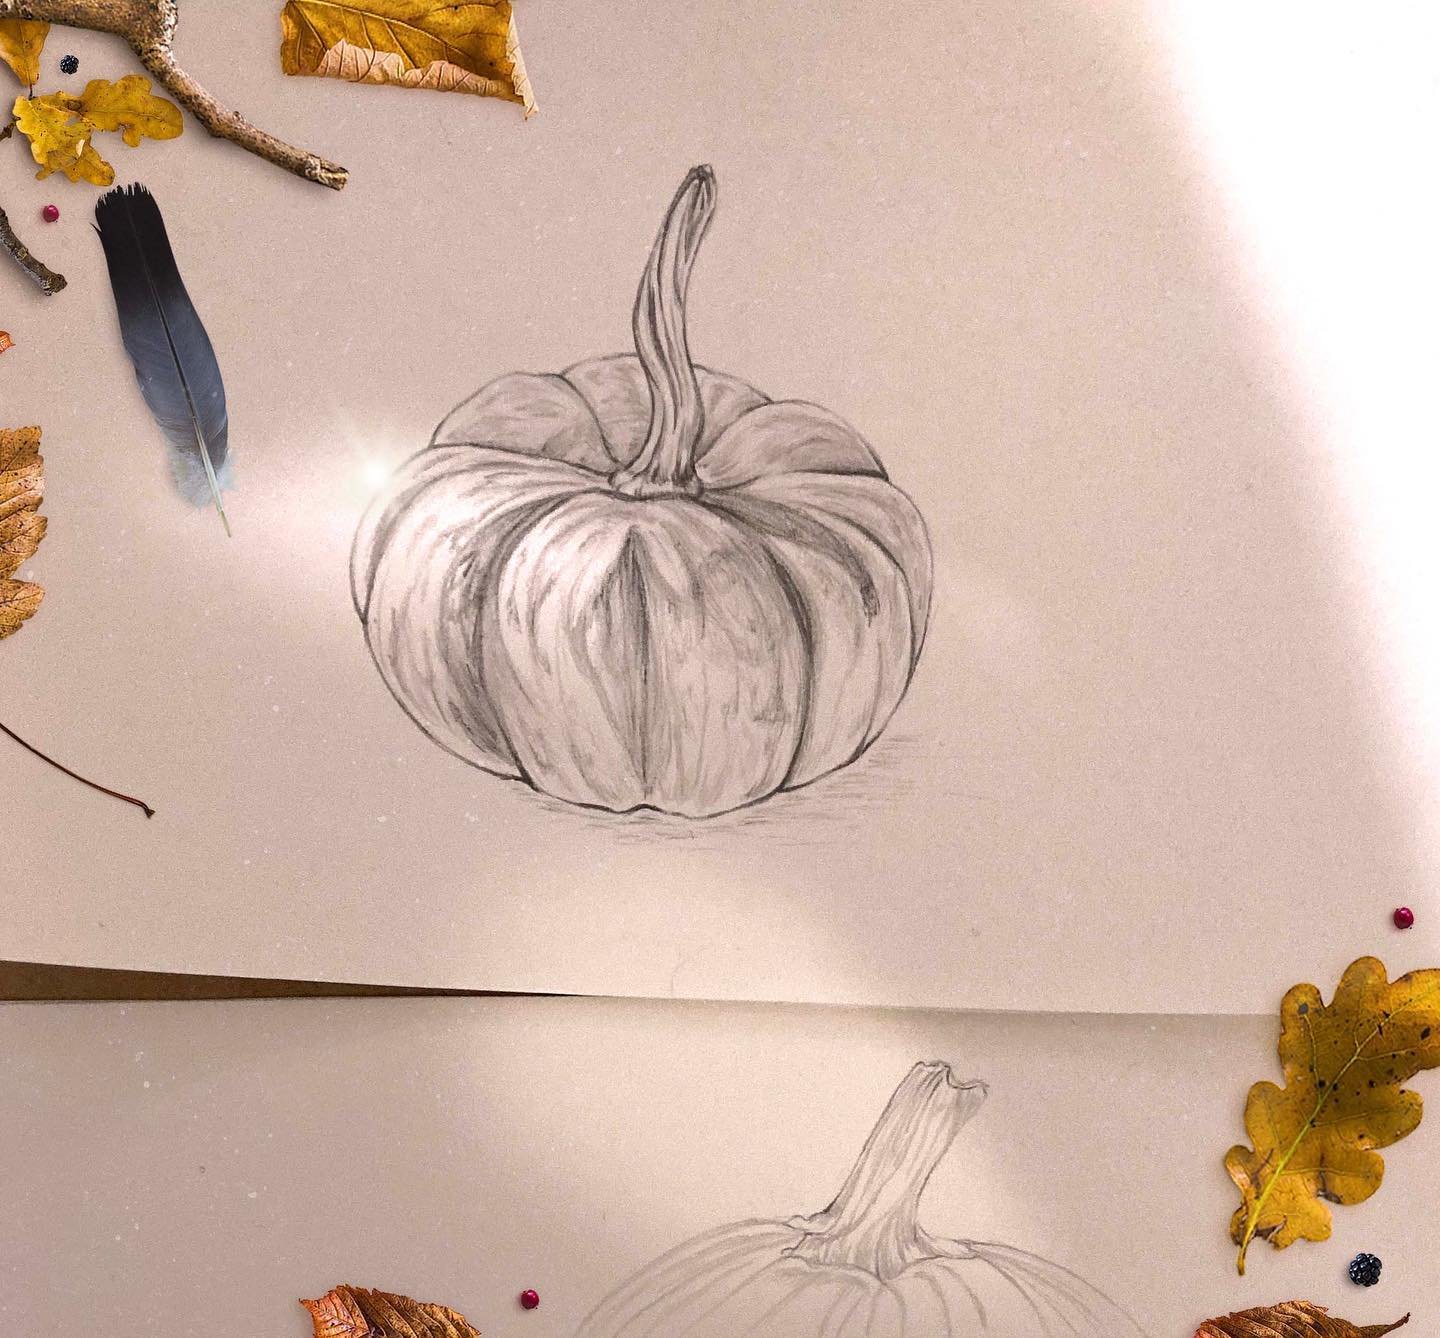 Pumpkin magic ✨✍🏼

#illustrationartists #fantasyillustration #pumpkinillustration #childrensillustration #wipillustrations #woodlandnursery #graphitesketches #myillustrationprocess #halloweenillustrated #halloweenillustrationforkids #spooky #wimsica